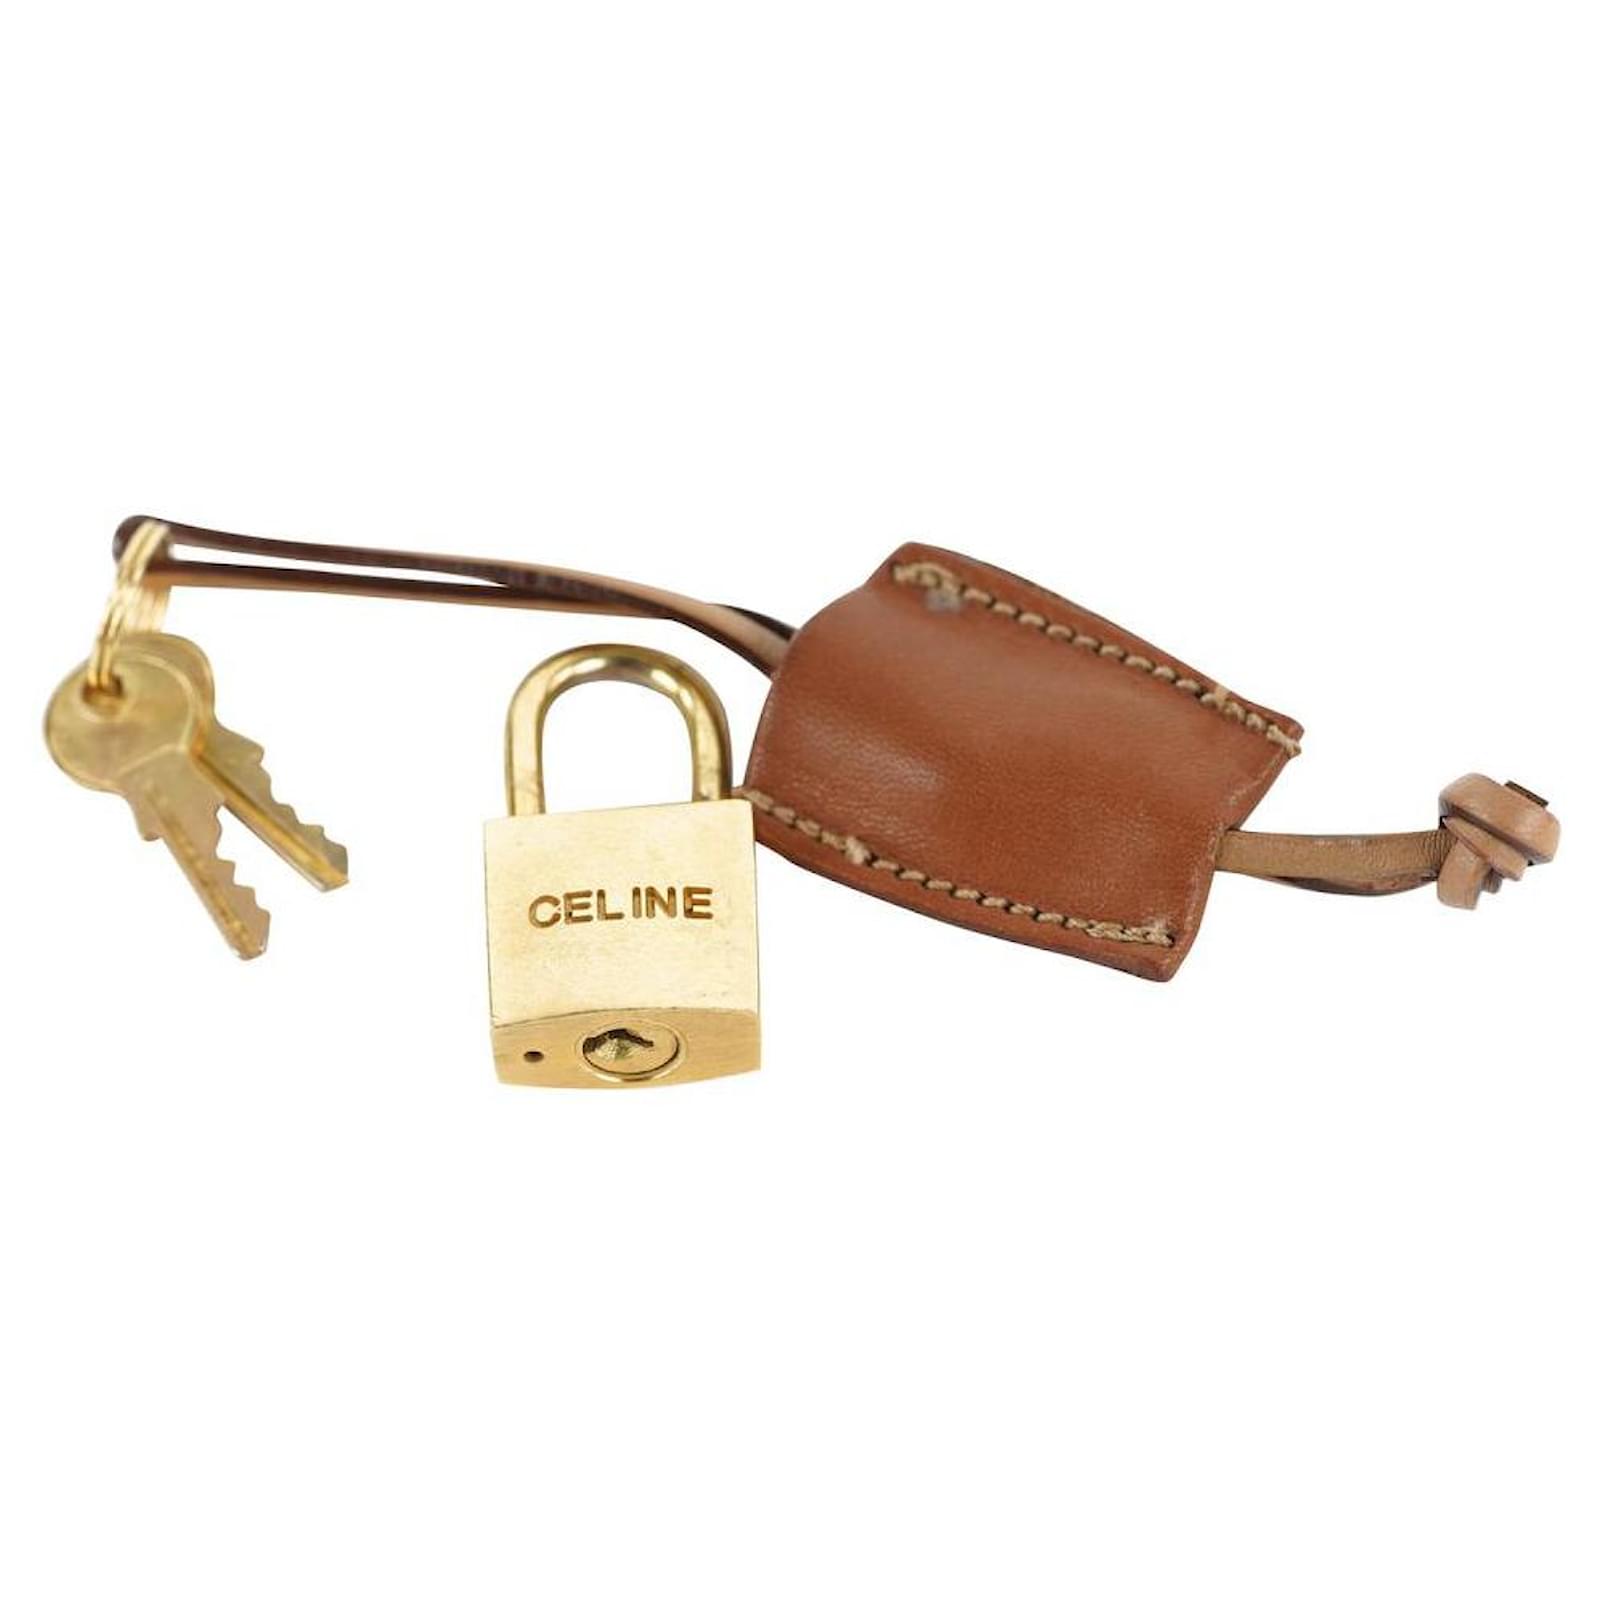 Louis-Vuitton-Set-of-10-Lock-&-Key-Cadena-Key-Lock-Gold